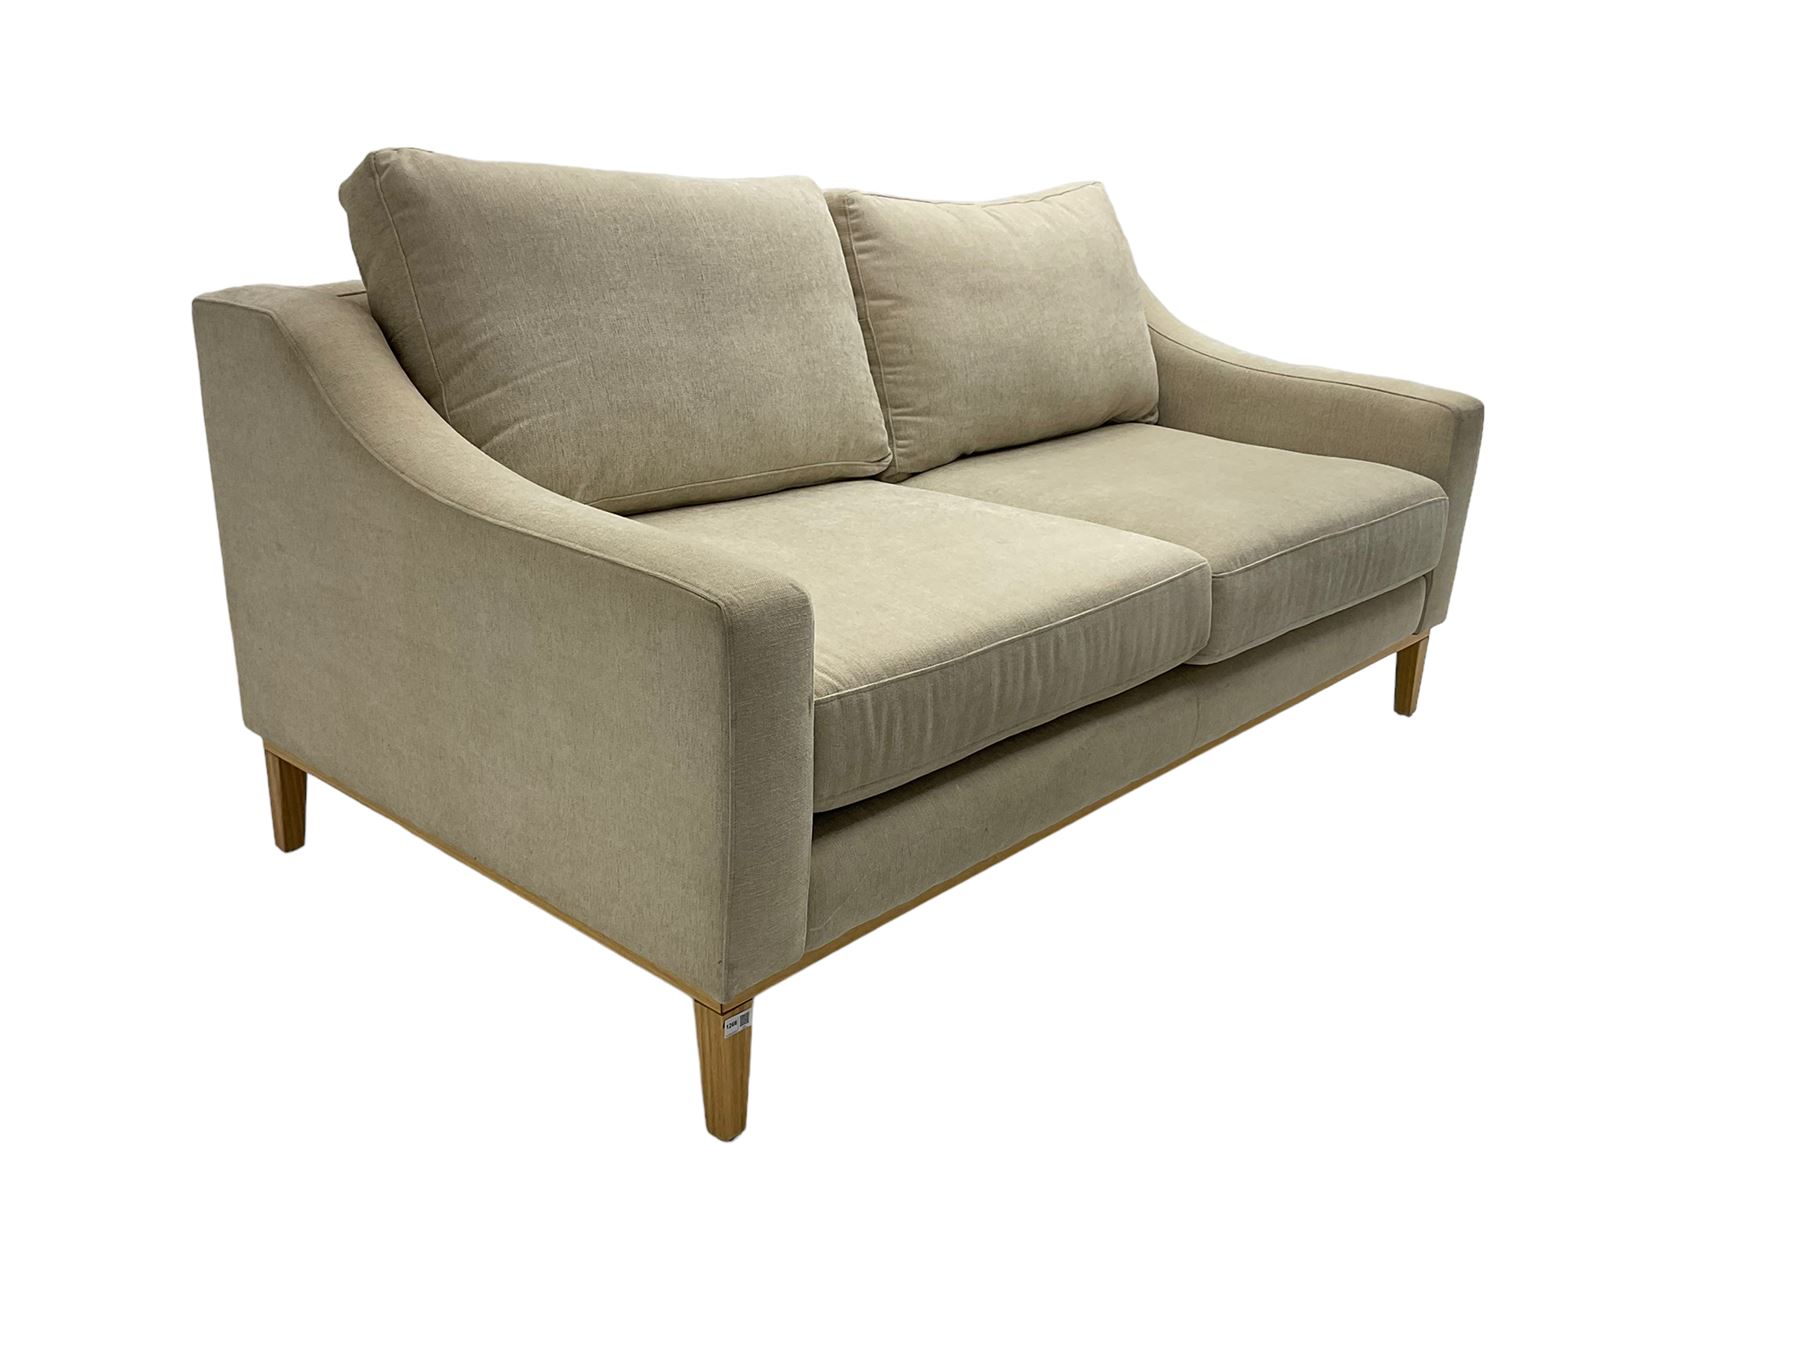 Noble & Jones - three seat sofa - Image 9 of 13